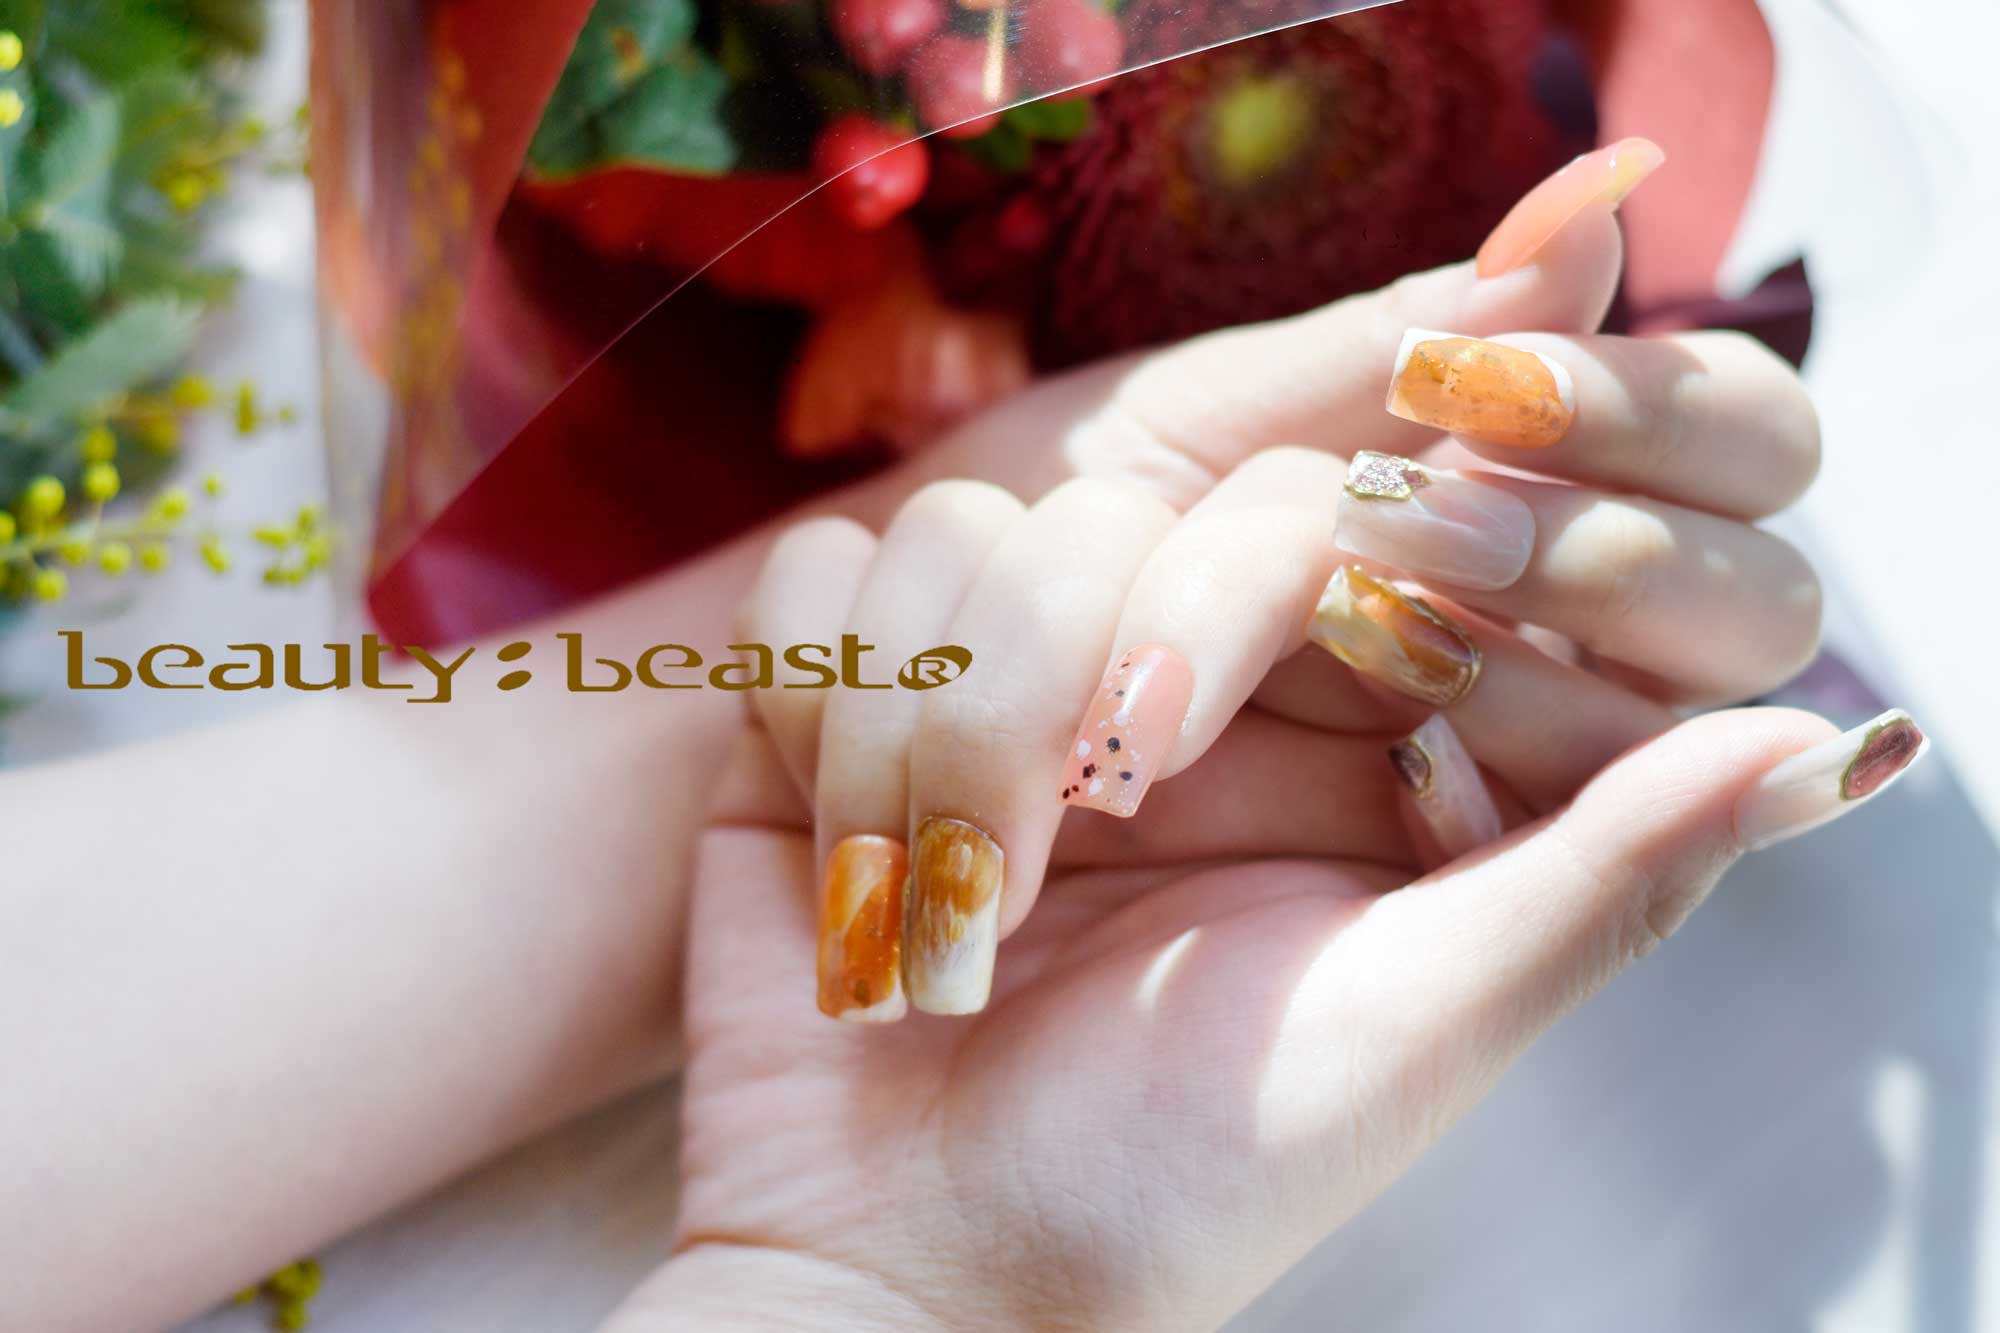 beauty:beast for nail 並木店のアイキャッチ画像